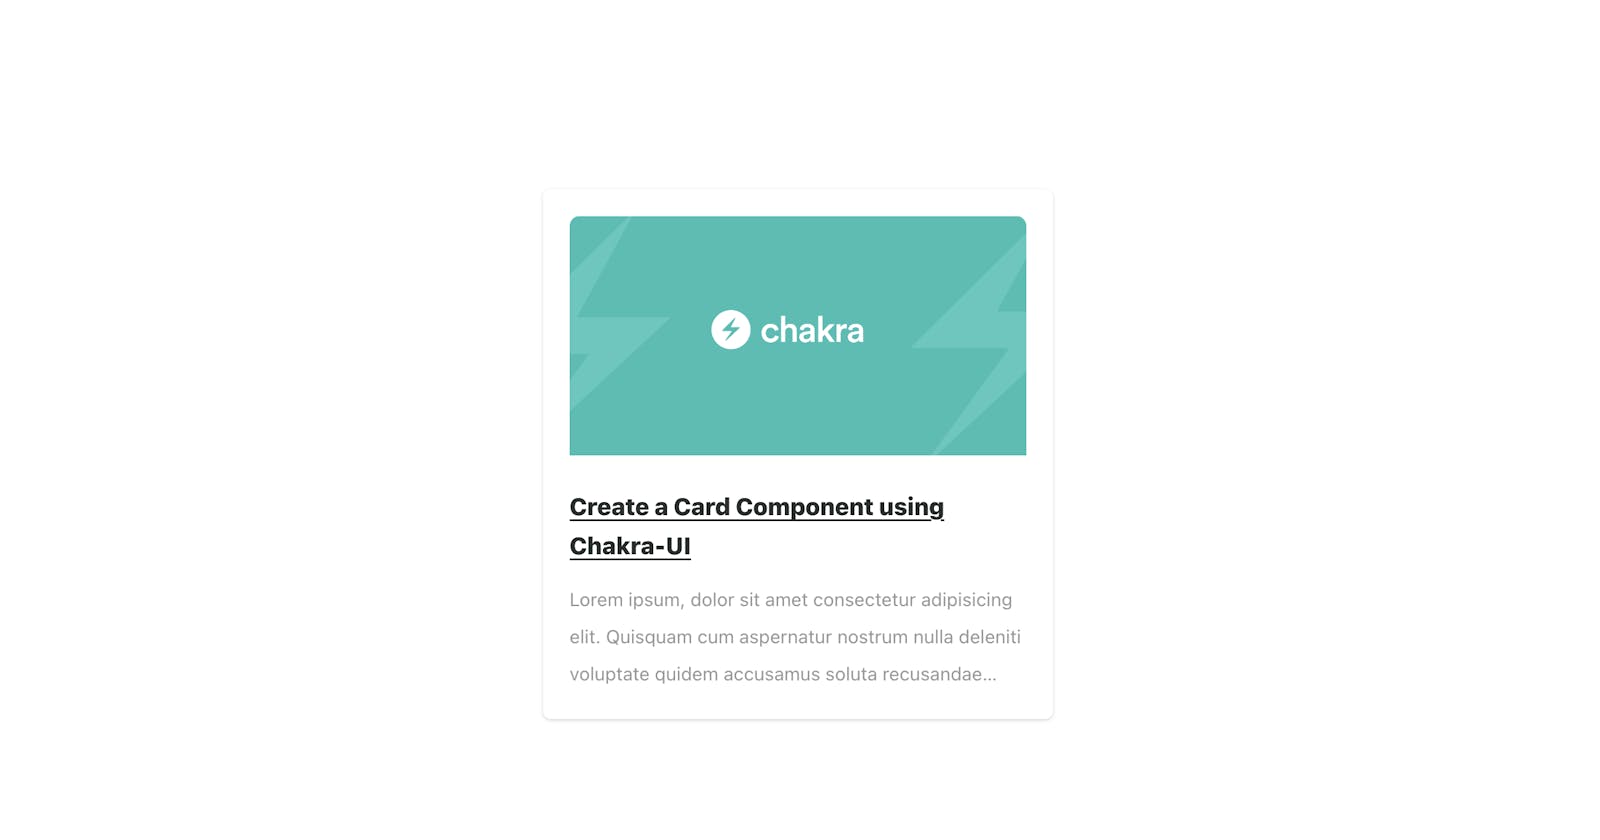 Create a Card Component Using Chakra-UI